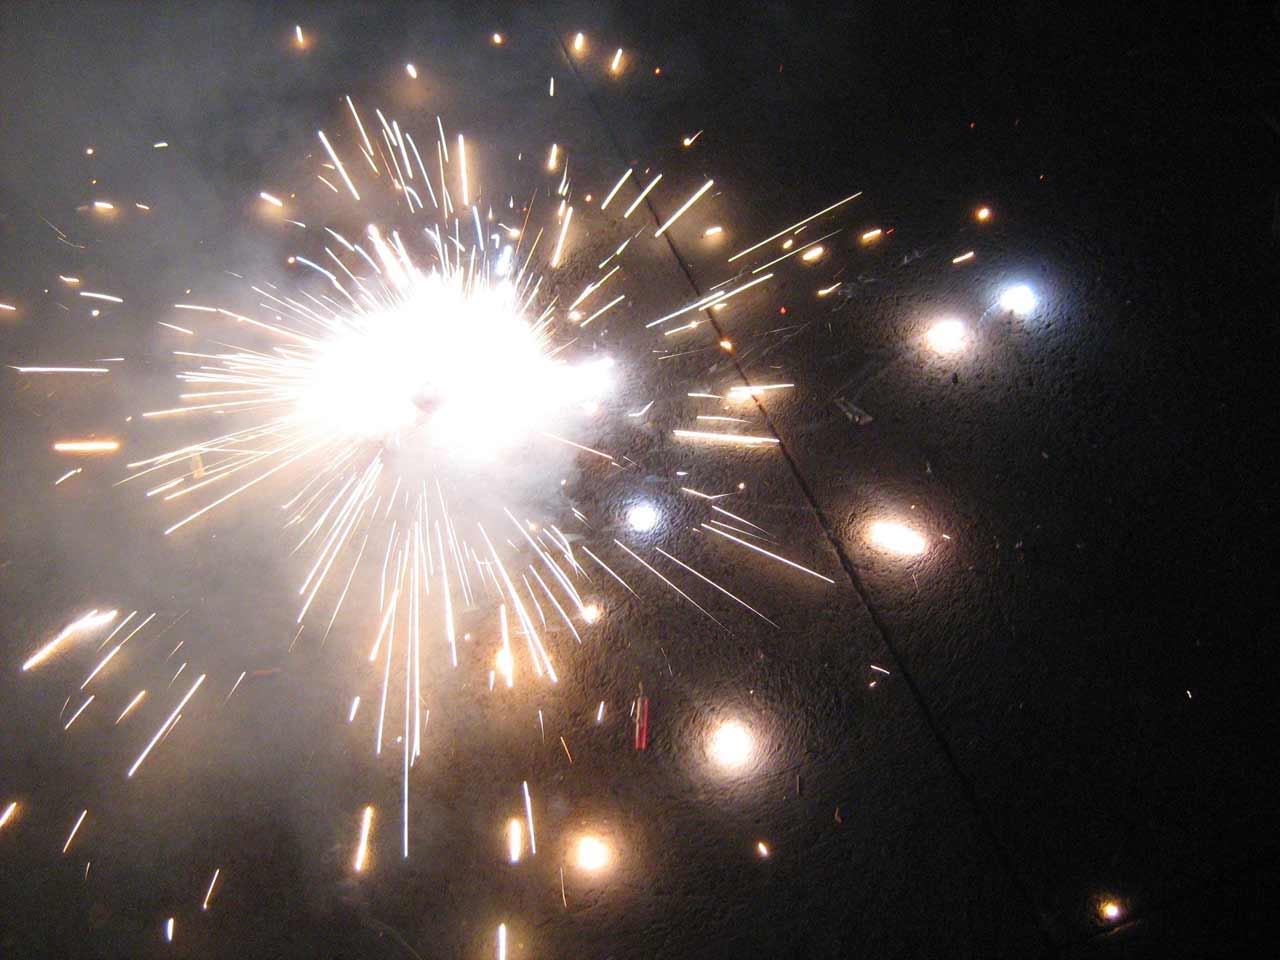 http://2.bp.blogspot.com/-lgIEwysXzmg/TmpdIhyQbcI/AAAAAAAAEVE/cZTLs0TnLWk/s1600/Diwali+fireworks+wallpapers+3.jpg